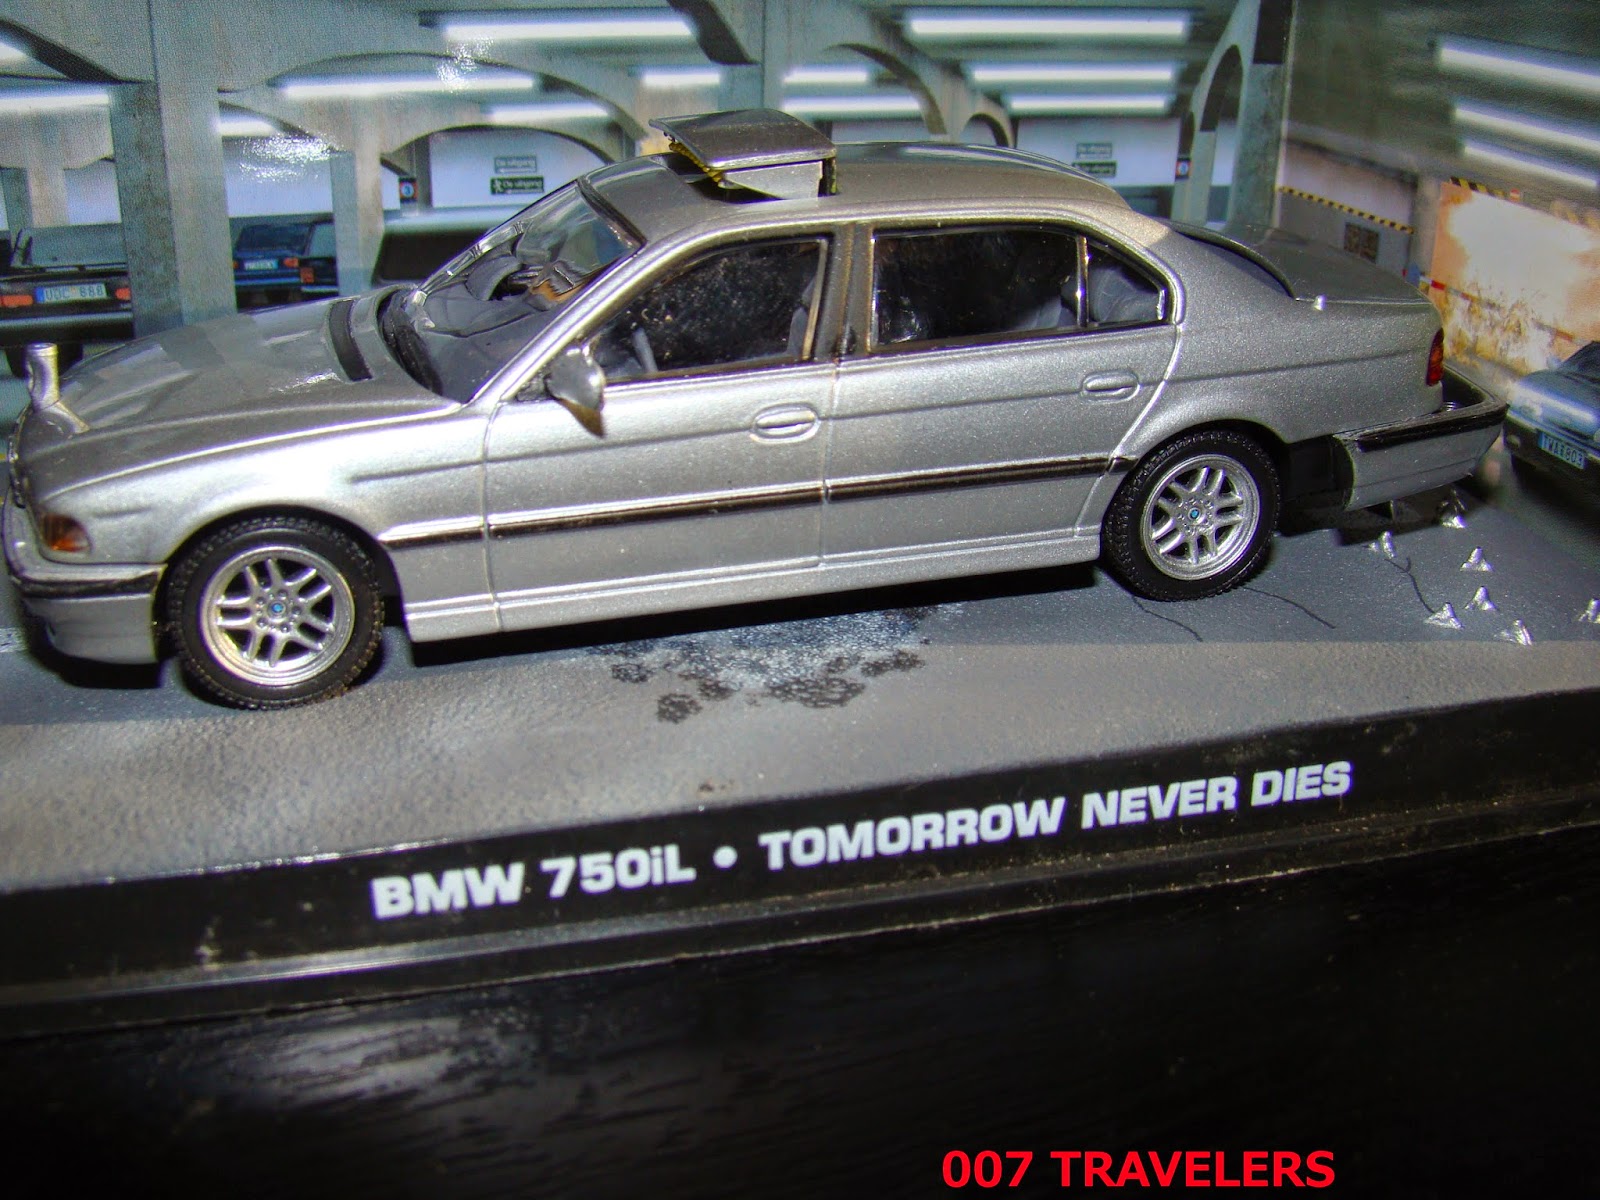 007 Vehicle: BMW 750iL / Tomorrow Never Dies (1997)